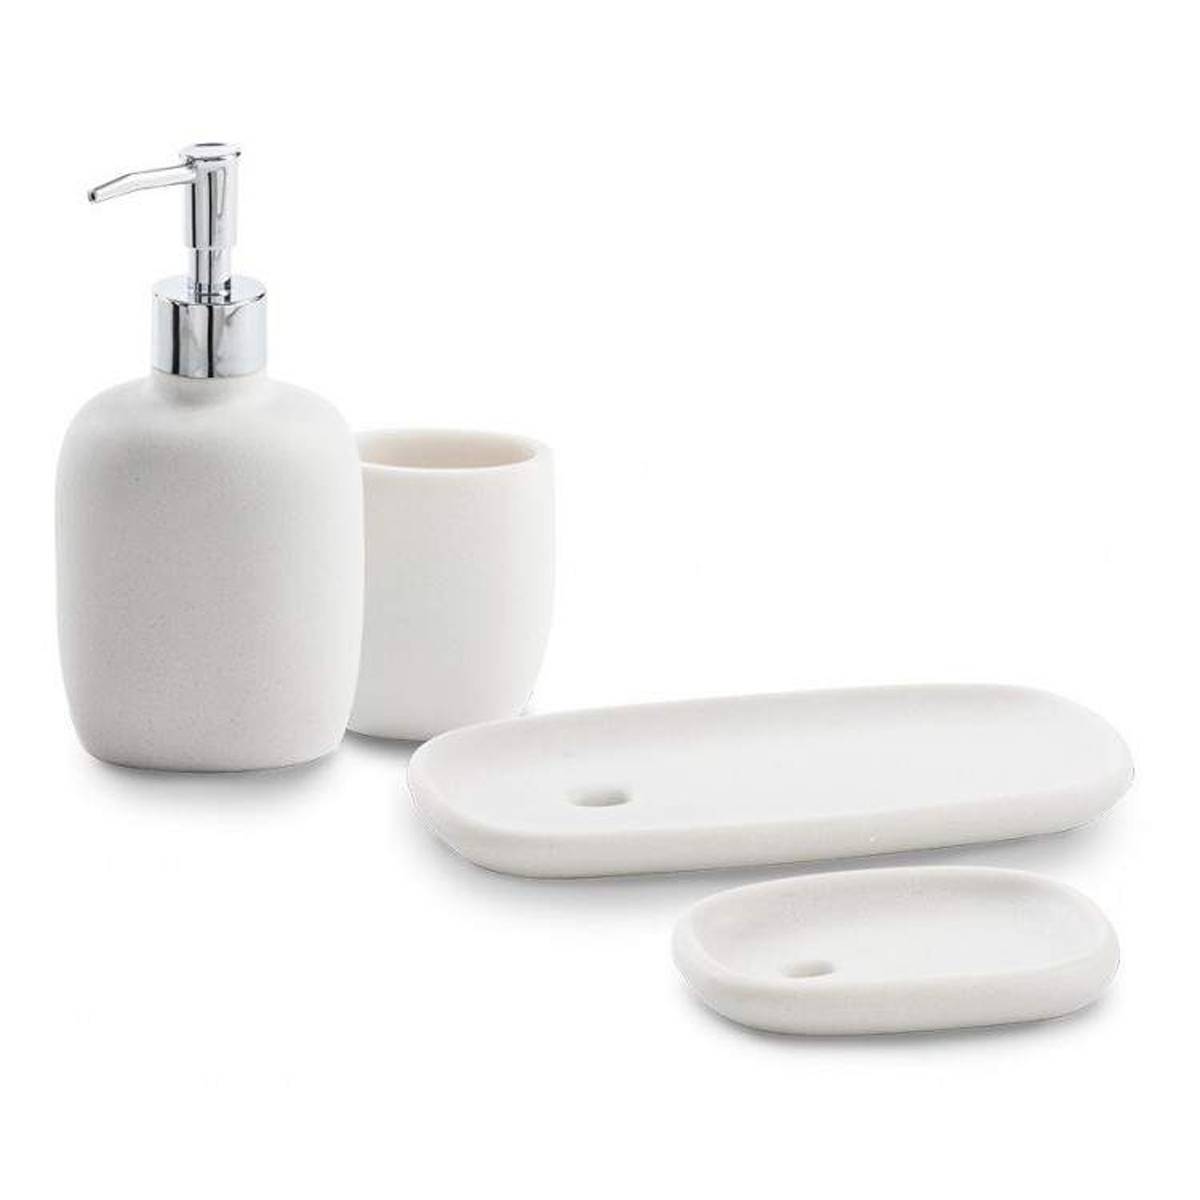 Cipi set zen white da 4 pezzi in resina satinata bianca for Accessori da bagno